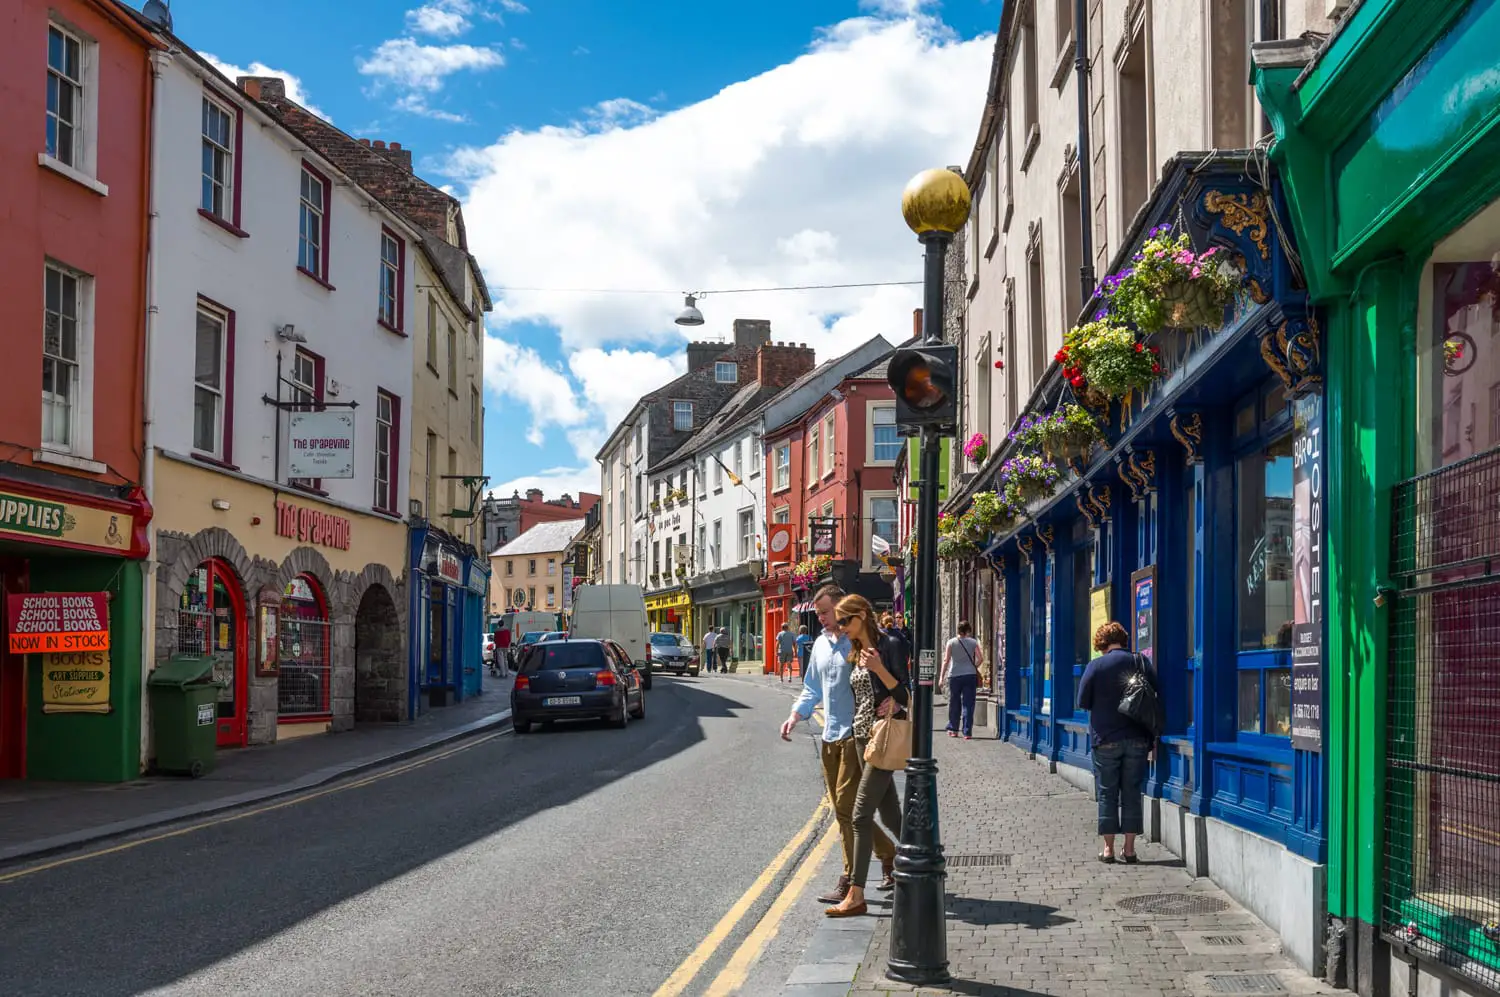 Kierans street in Kilkenn, Ireland